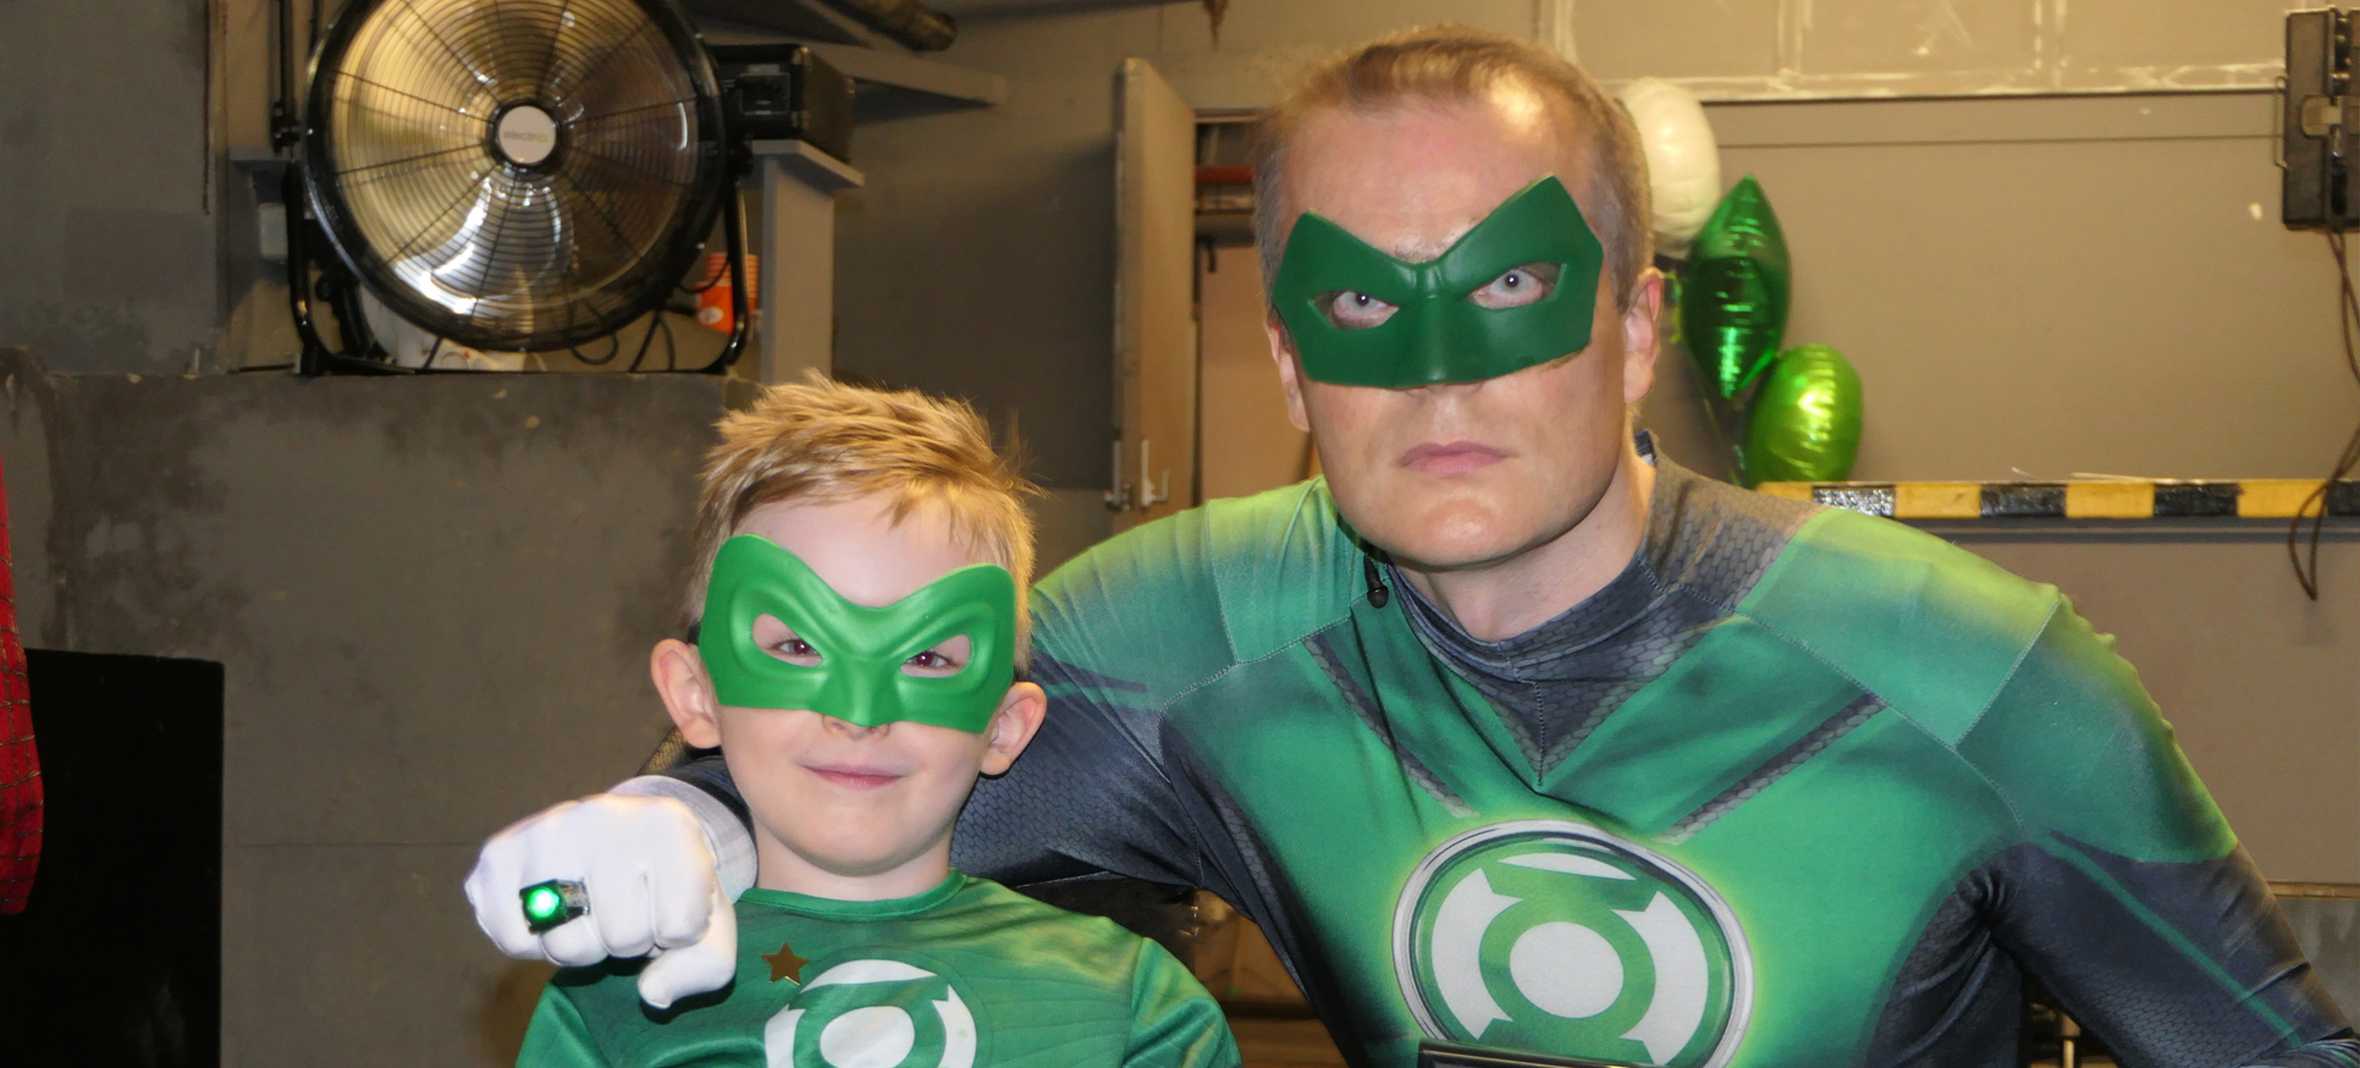 George and Green Lantern on George's wish